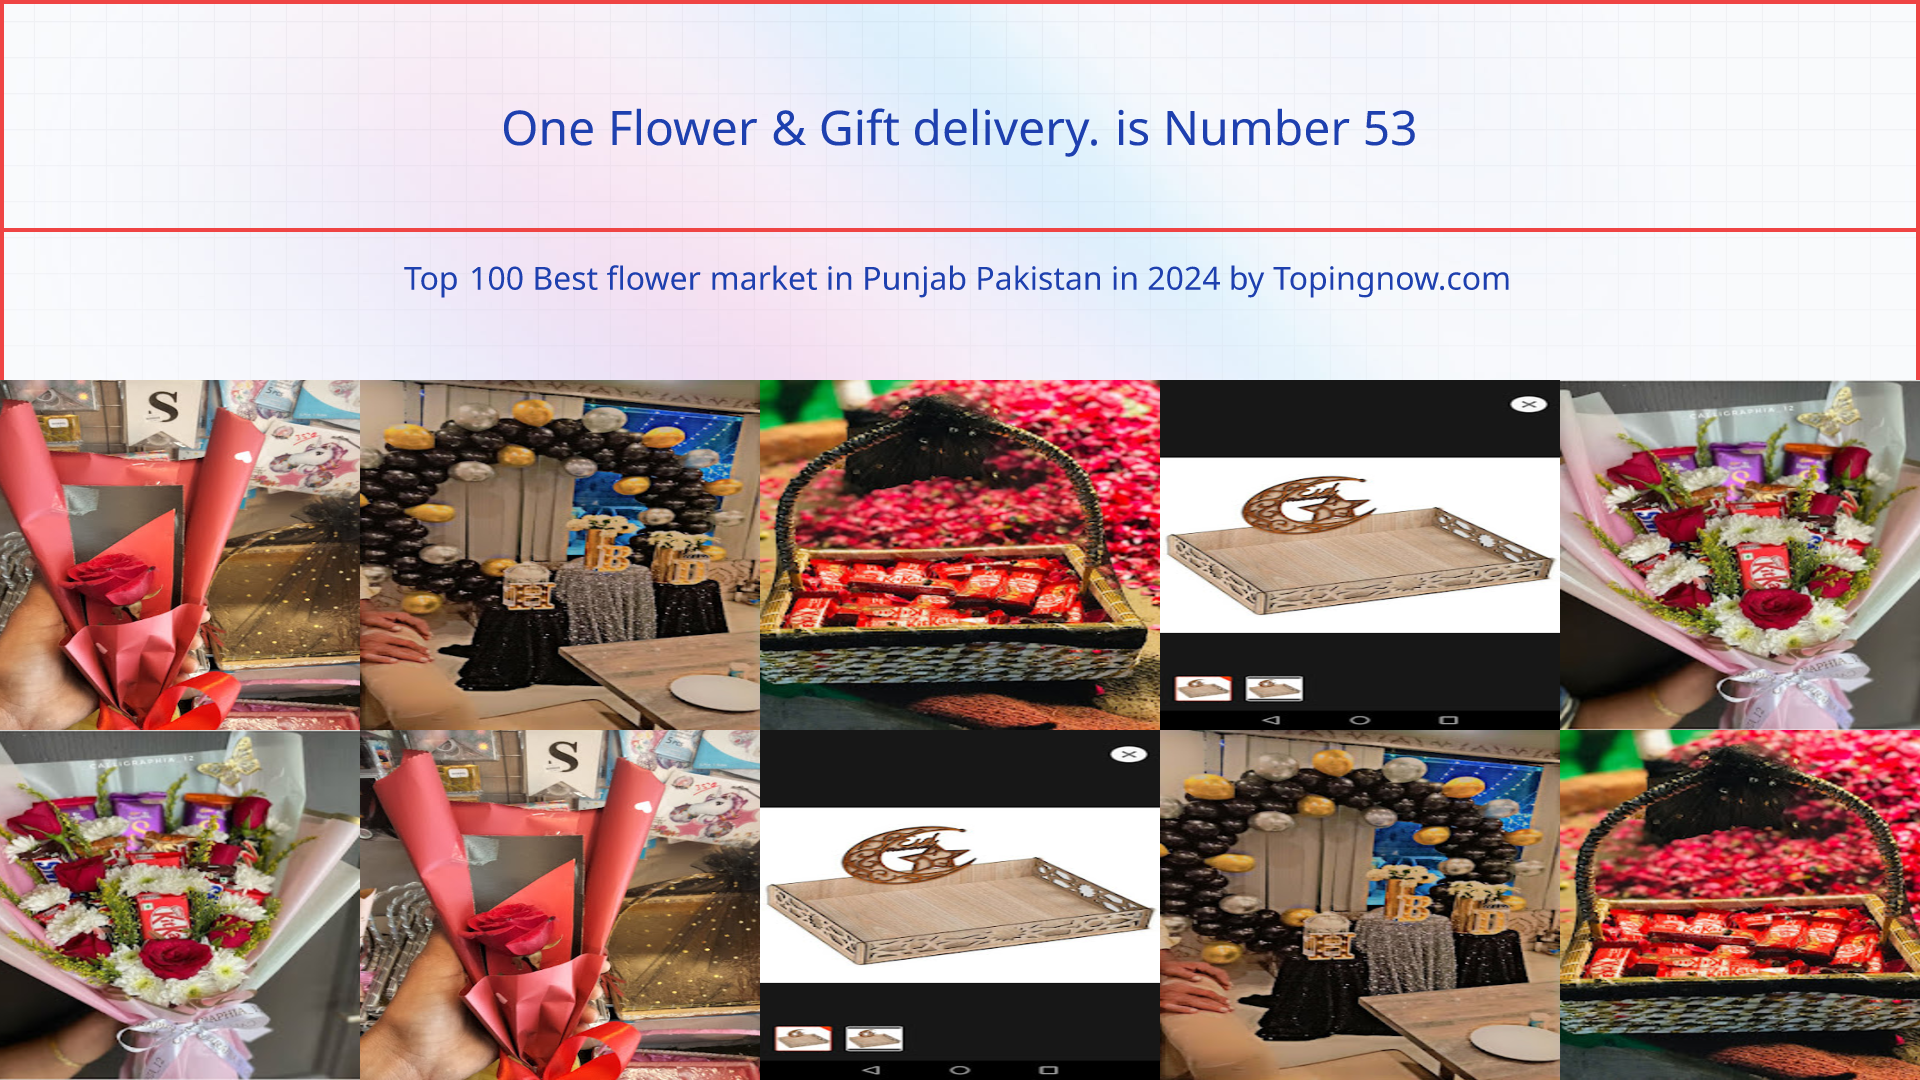 One Flower & Gift delivery.: Top 100 Best flower market in Punjab Pakistan in 2024